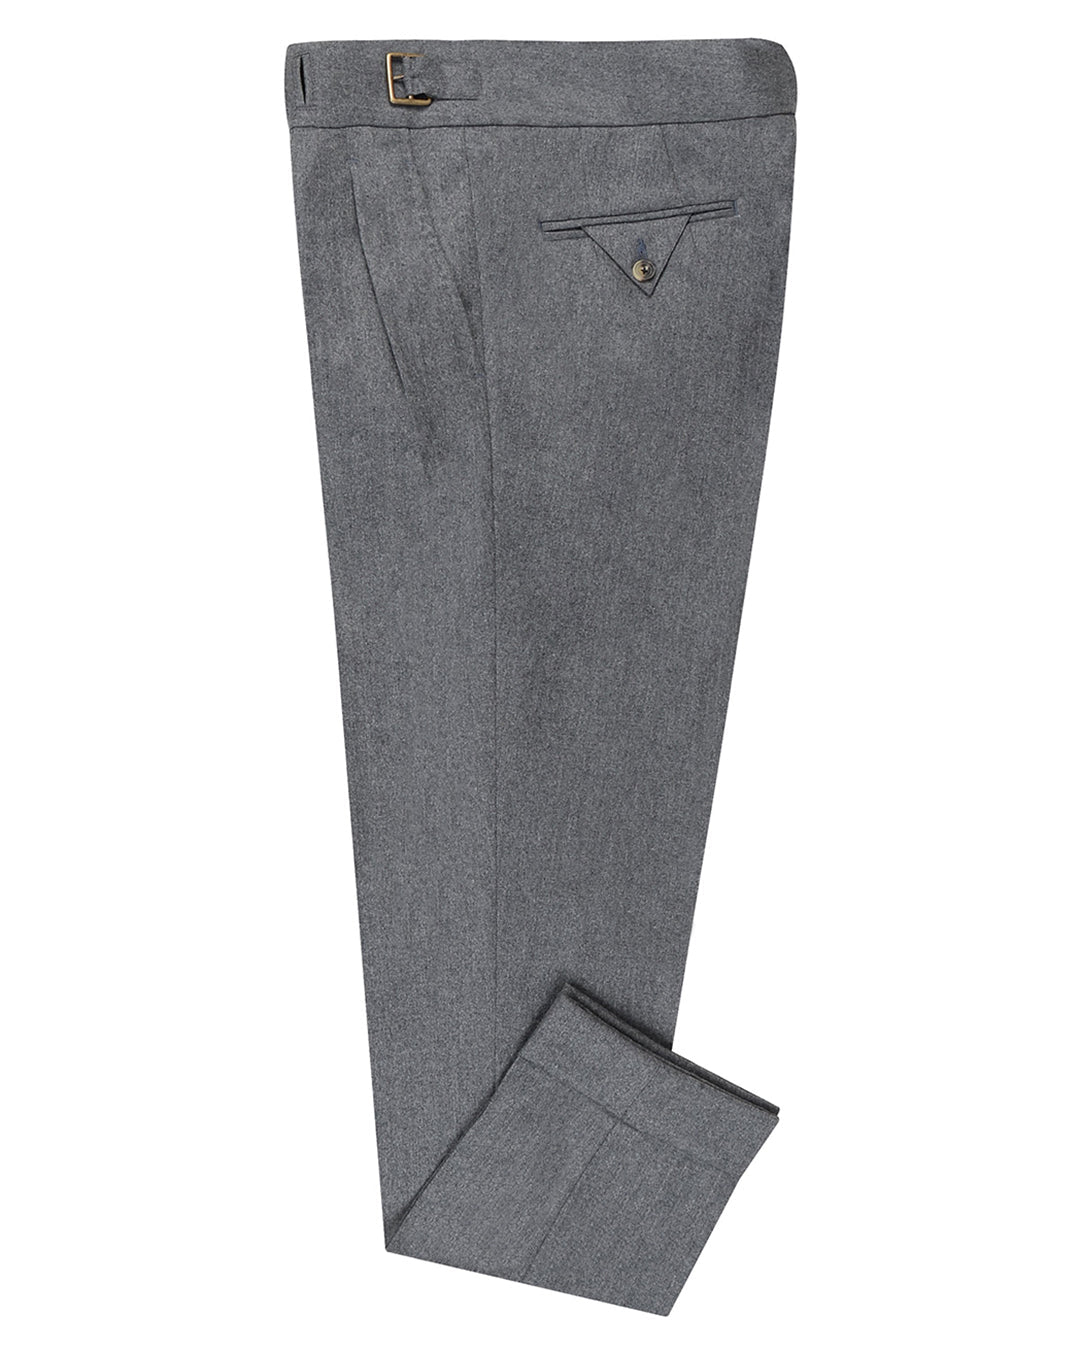 Gurkha Pant in Vitale Barberis Canonico - Flannels Grey